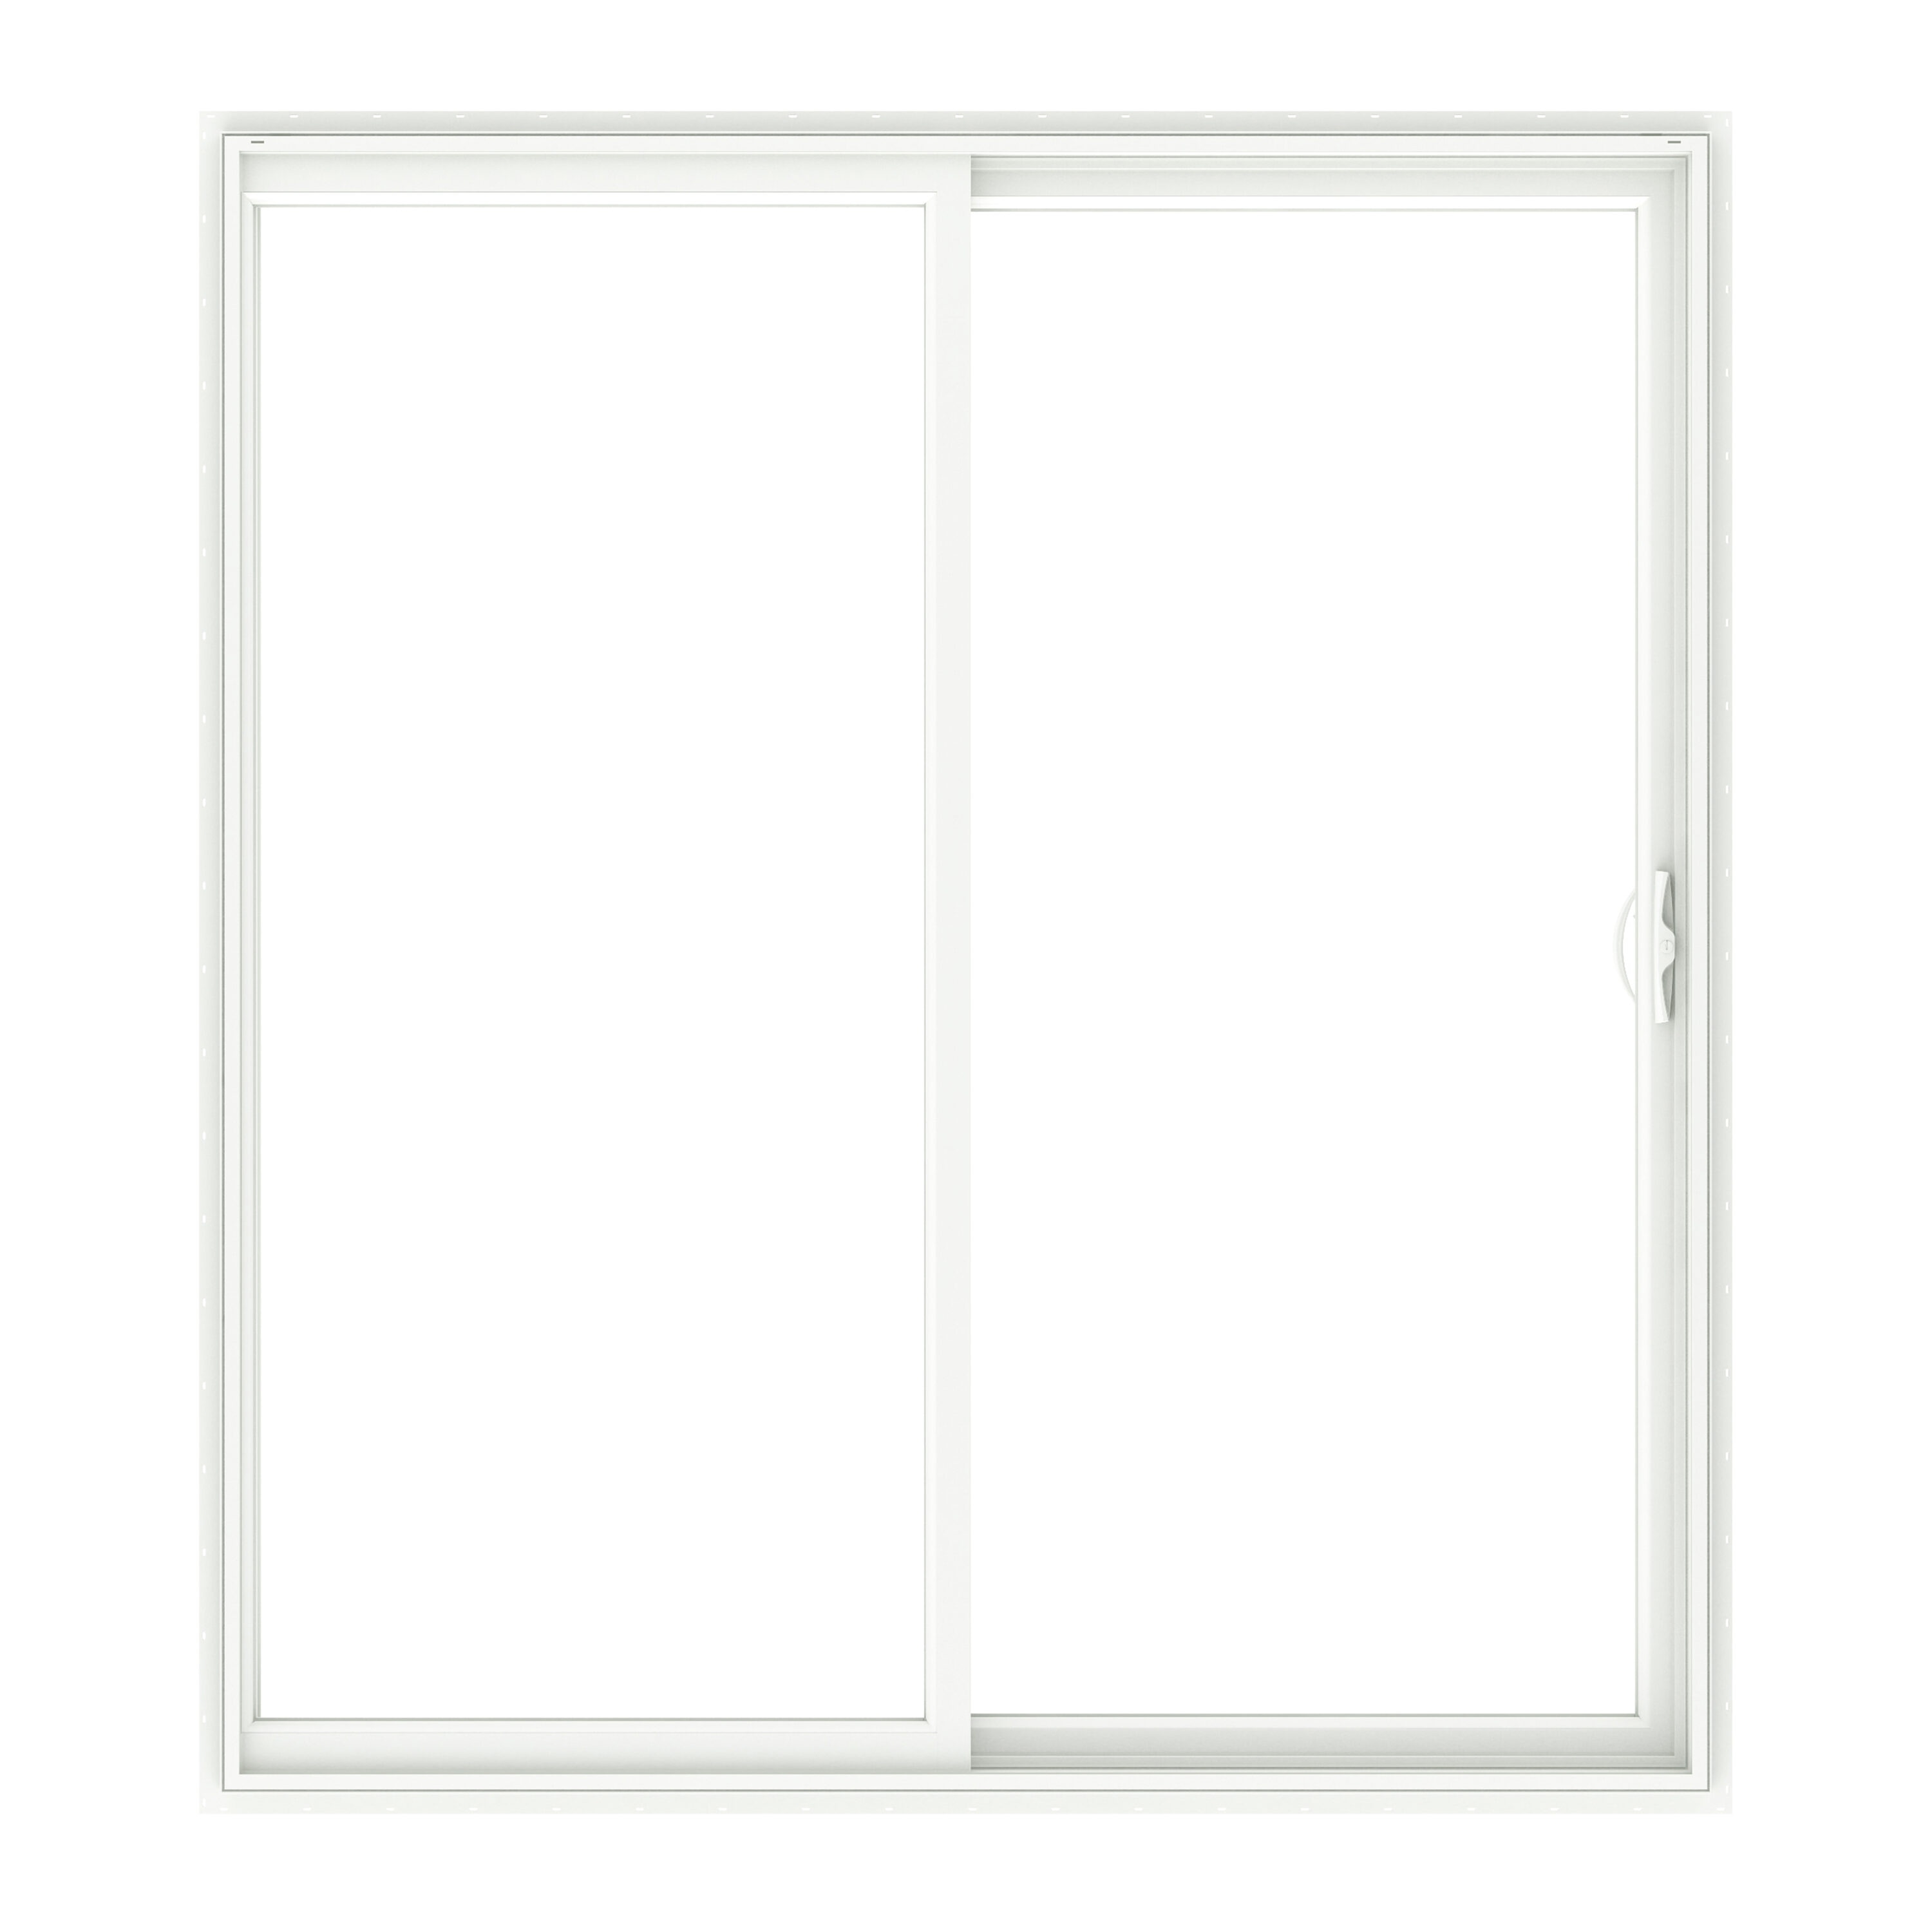 150 Series 60-in x 80-in Low-e Argon White Vinyl Sliding Universal Double Patio Door | - Pella 1000009843